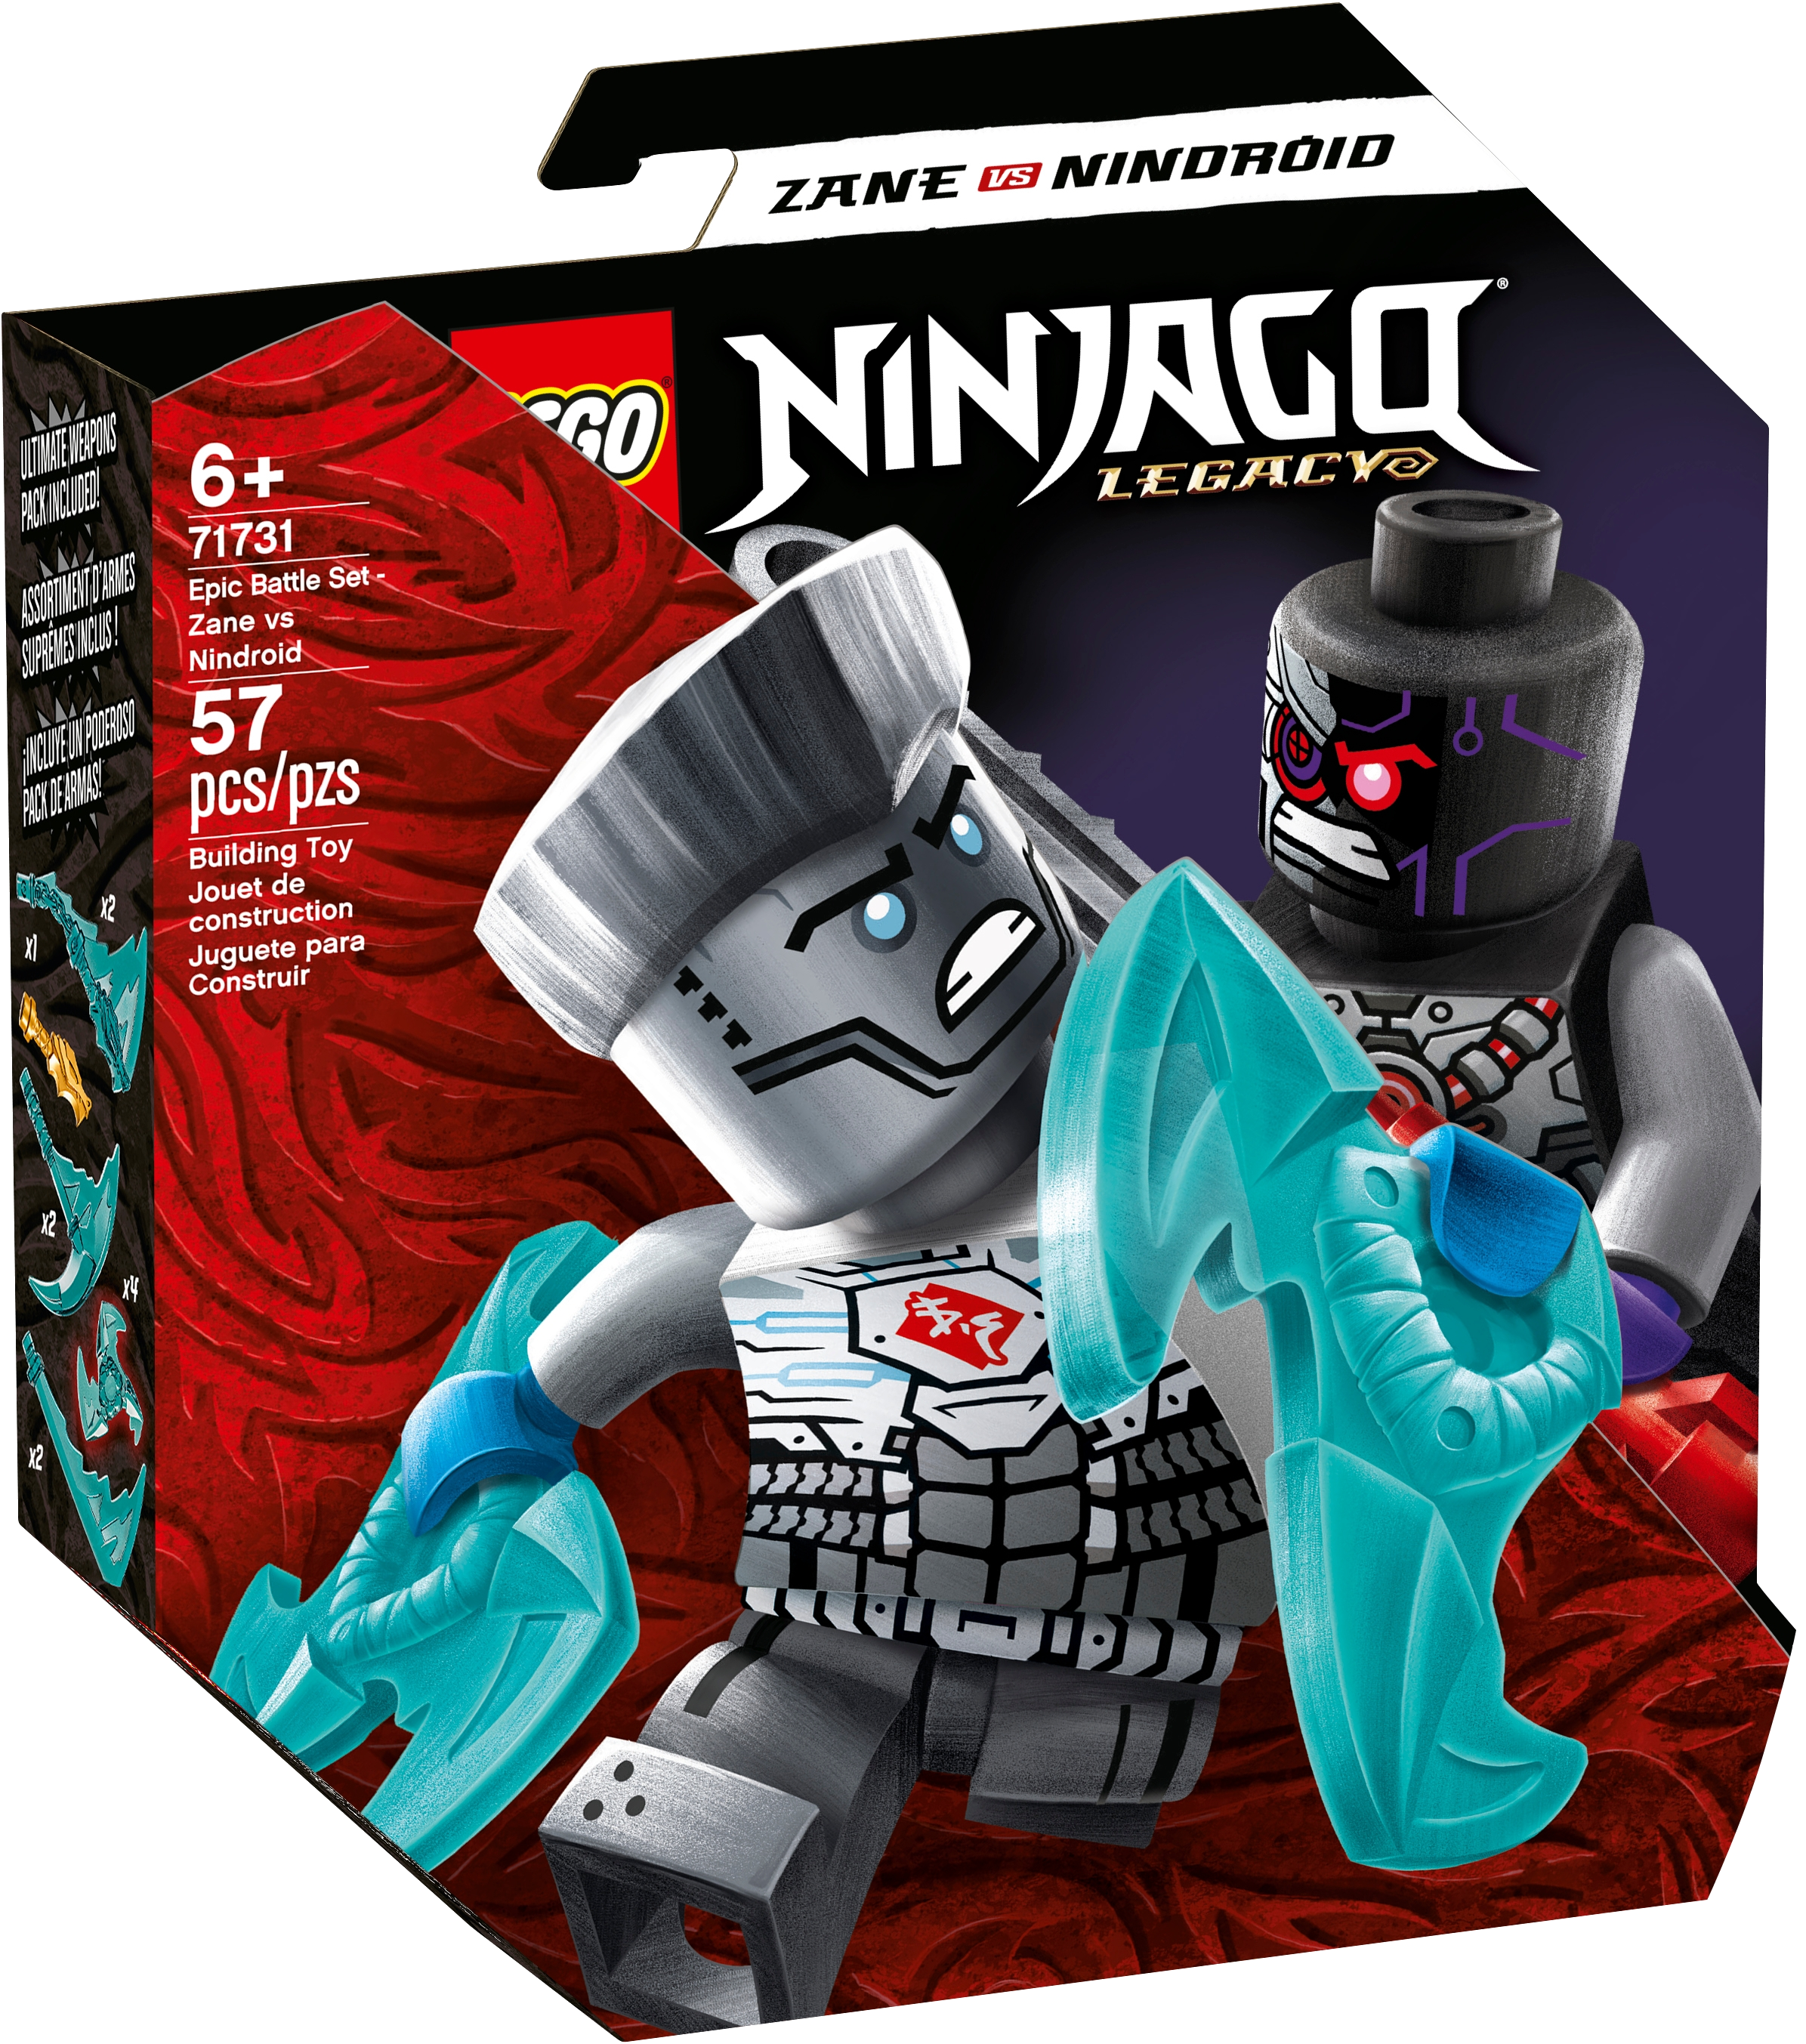 Lego Ninjago LE 23 Zane Vs Series 7: LE22 Master Yang Trading Card Nindroid